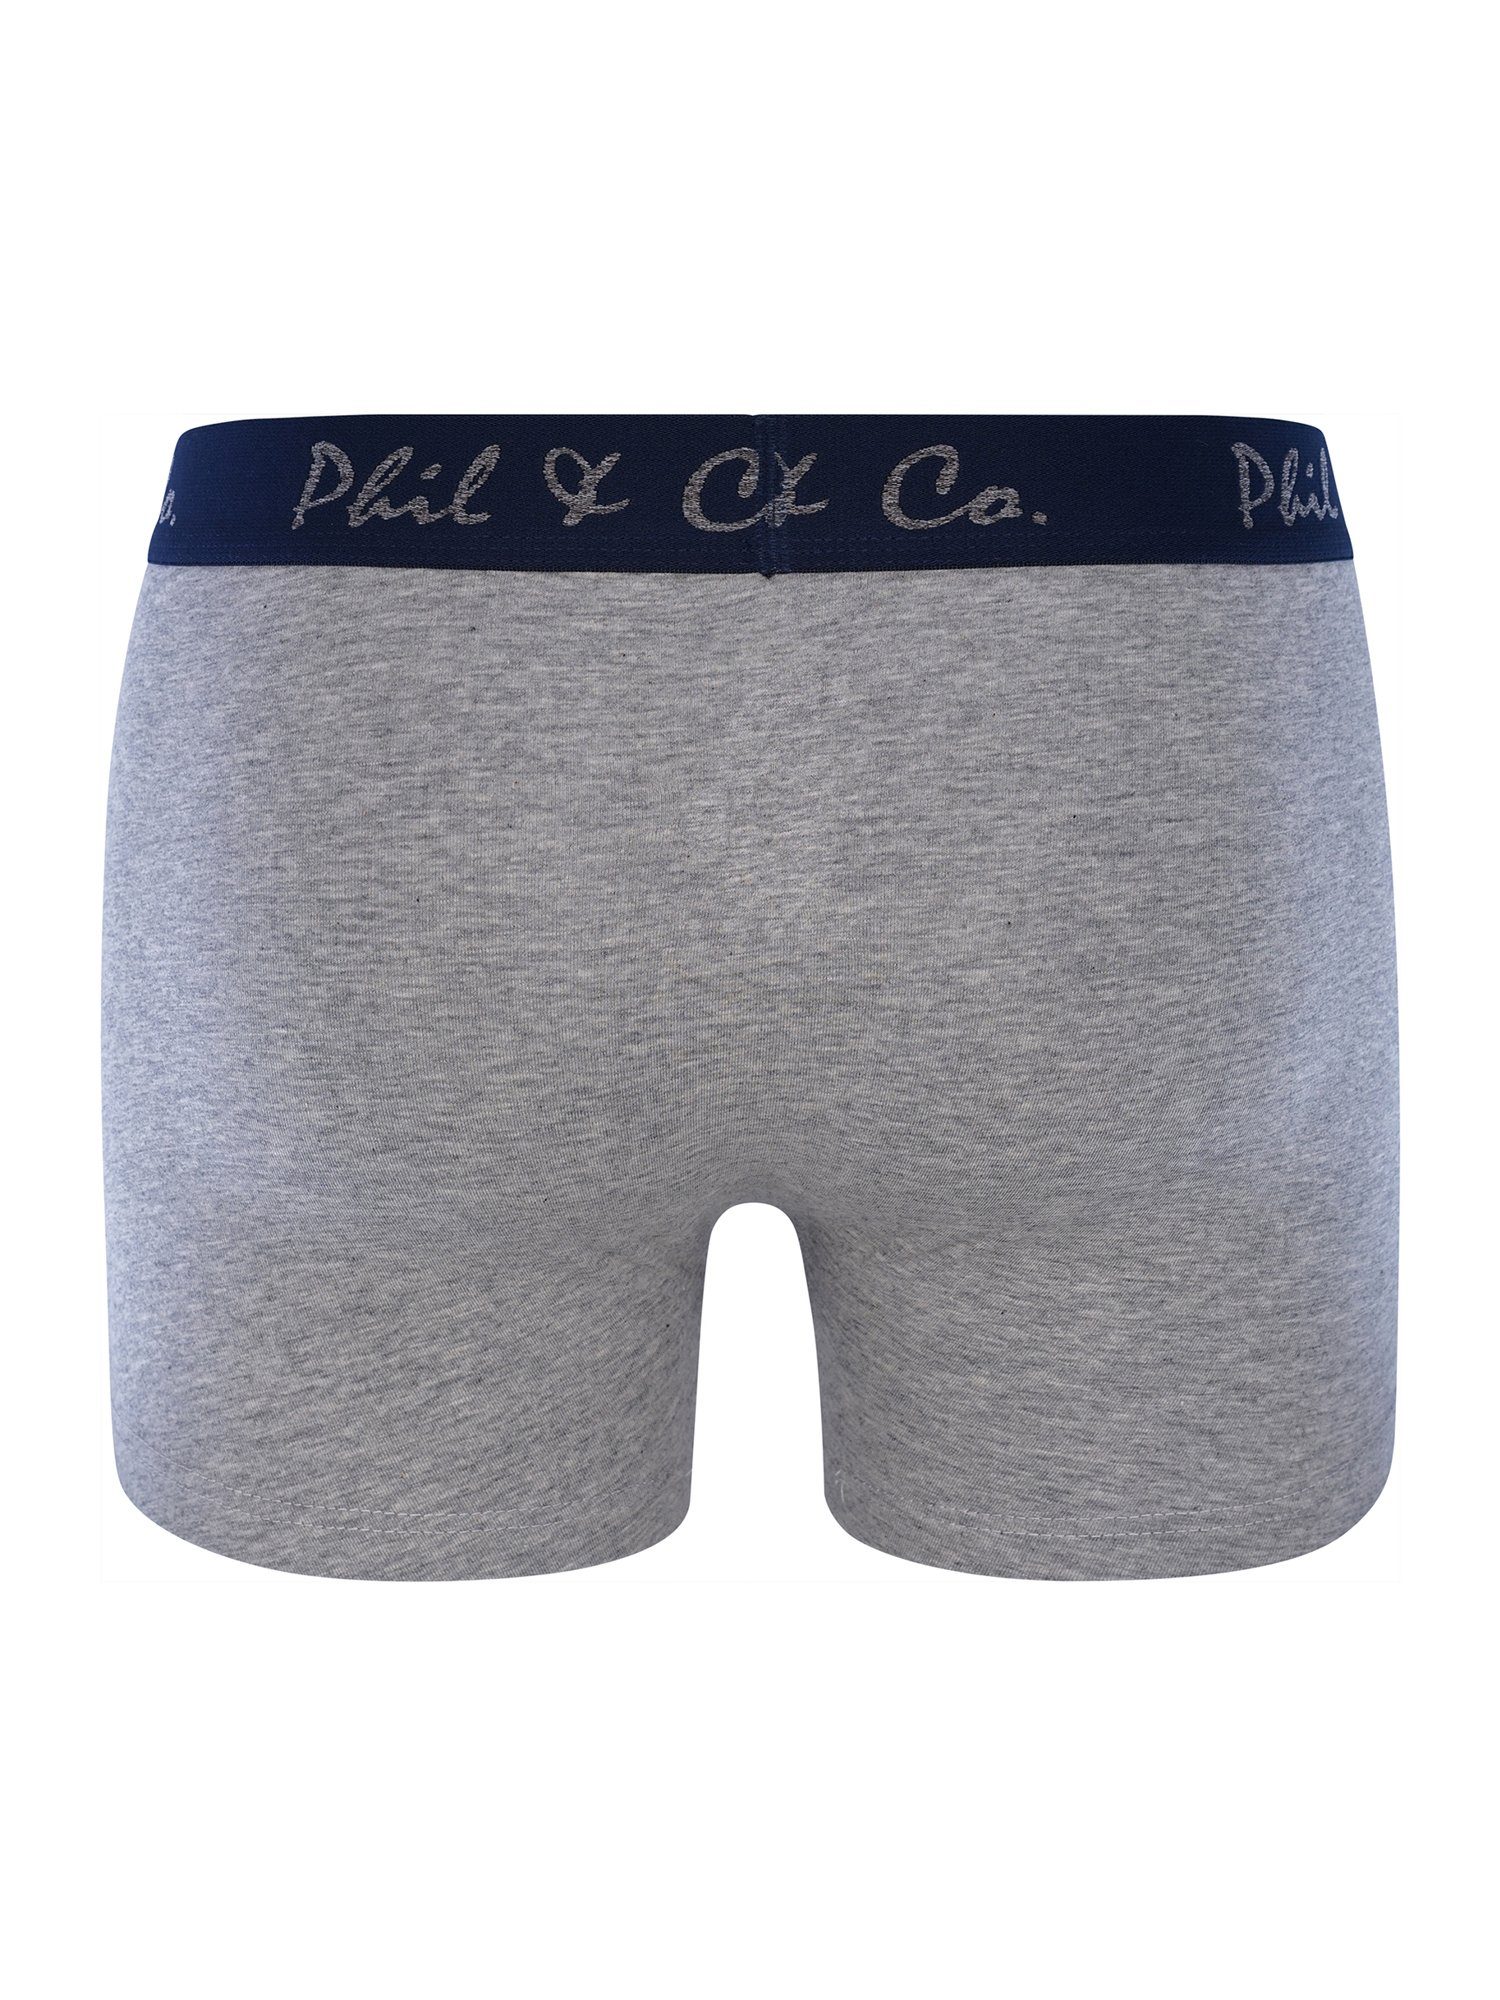 Phil & Co. Retro Jersey navy-grau (6-St) Pants